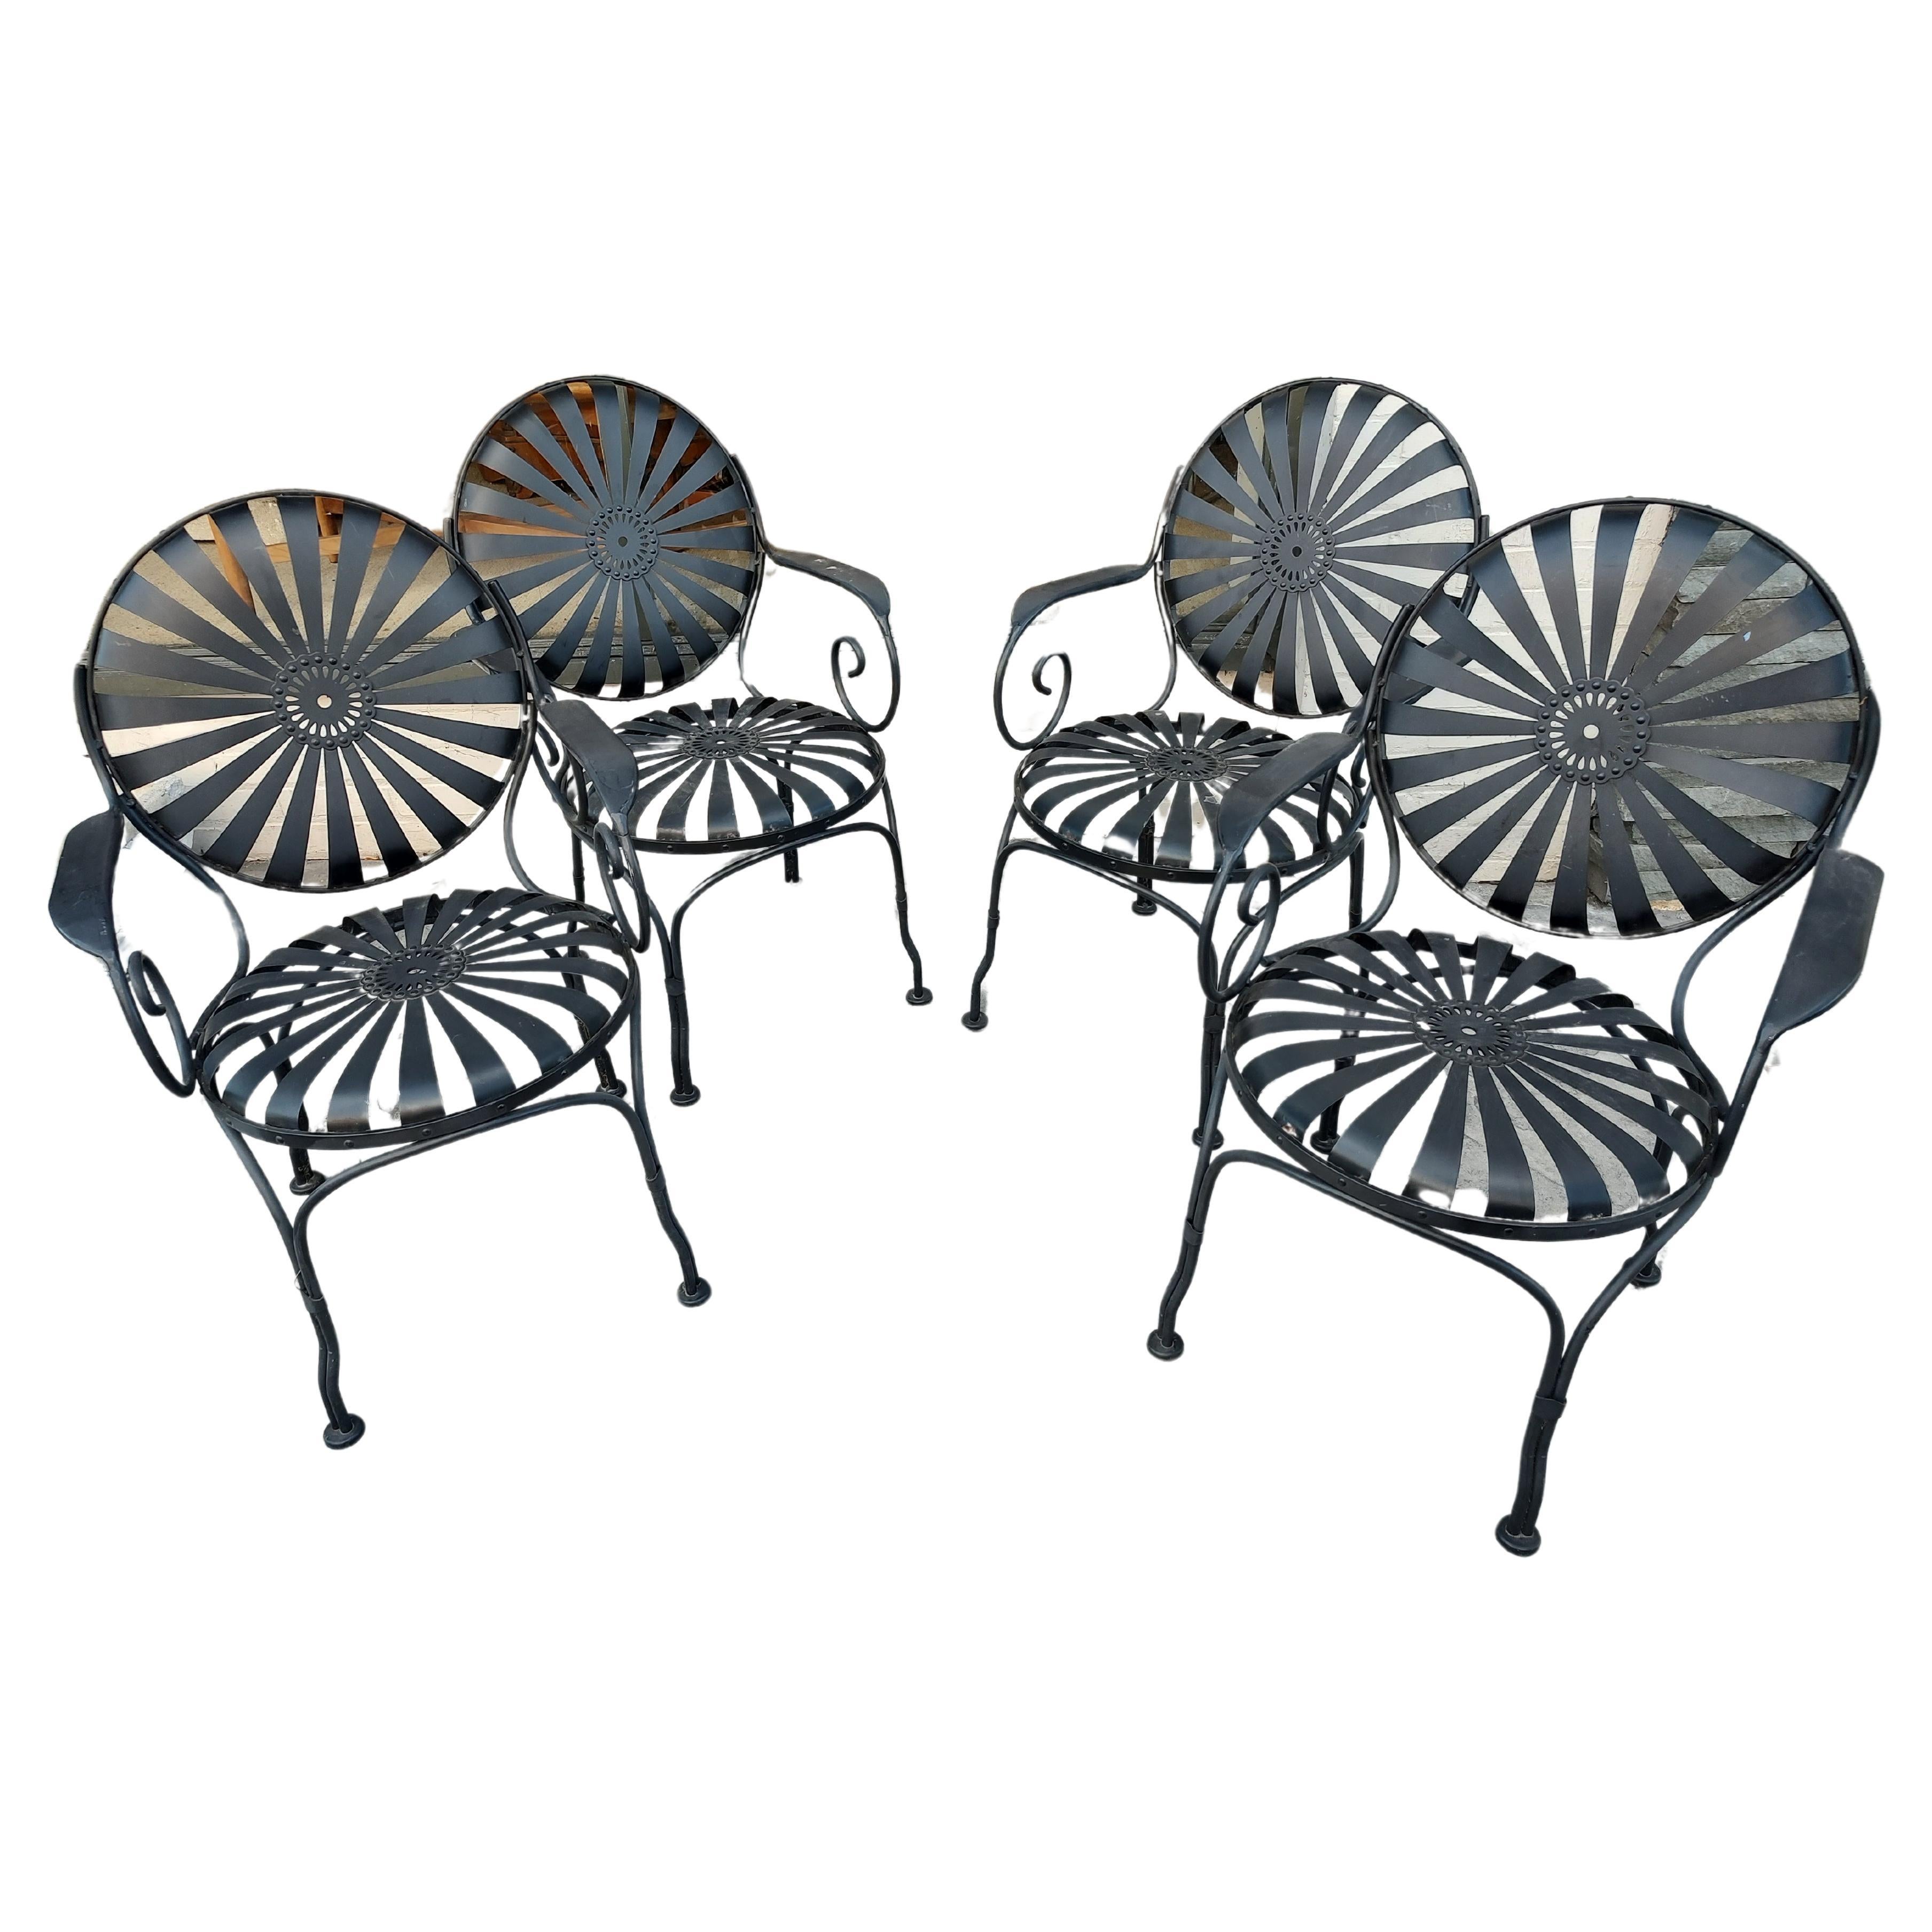 Set of 4 Iron Spring Seat Sunburst Sunflower Chairs, C1960